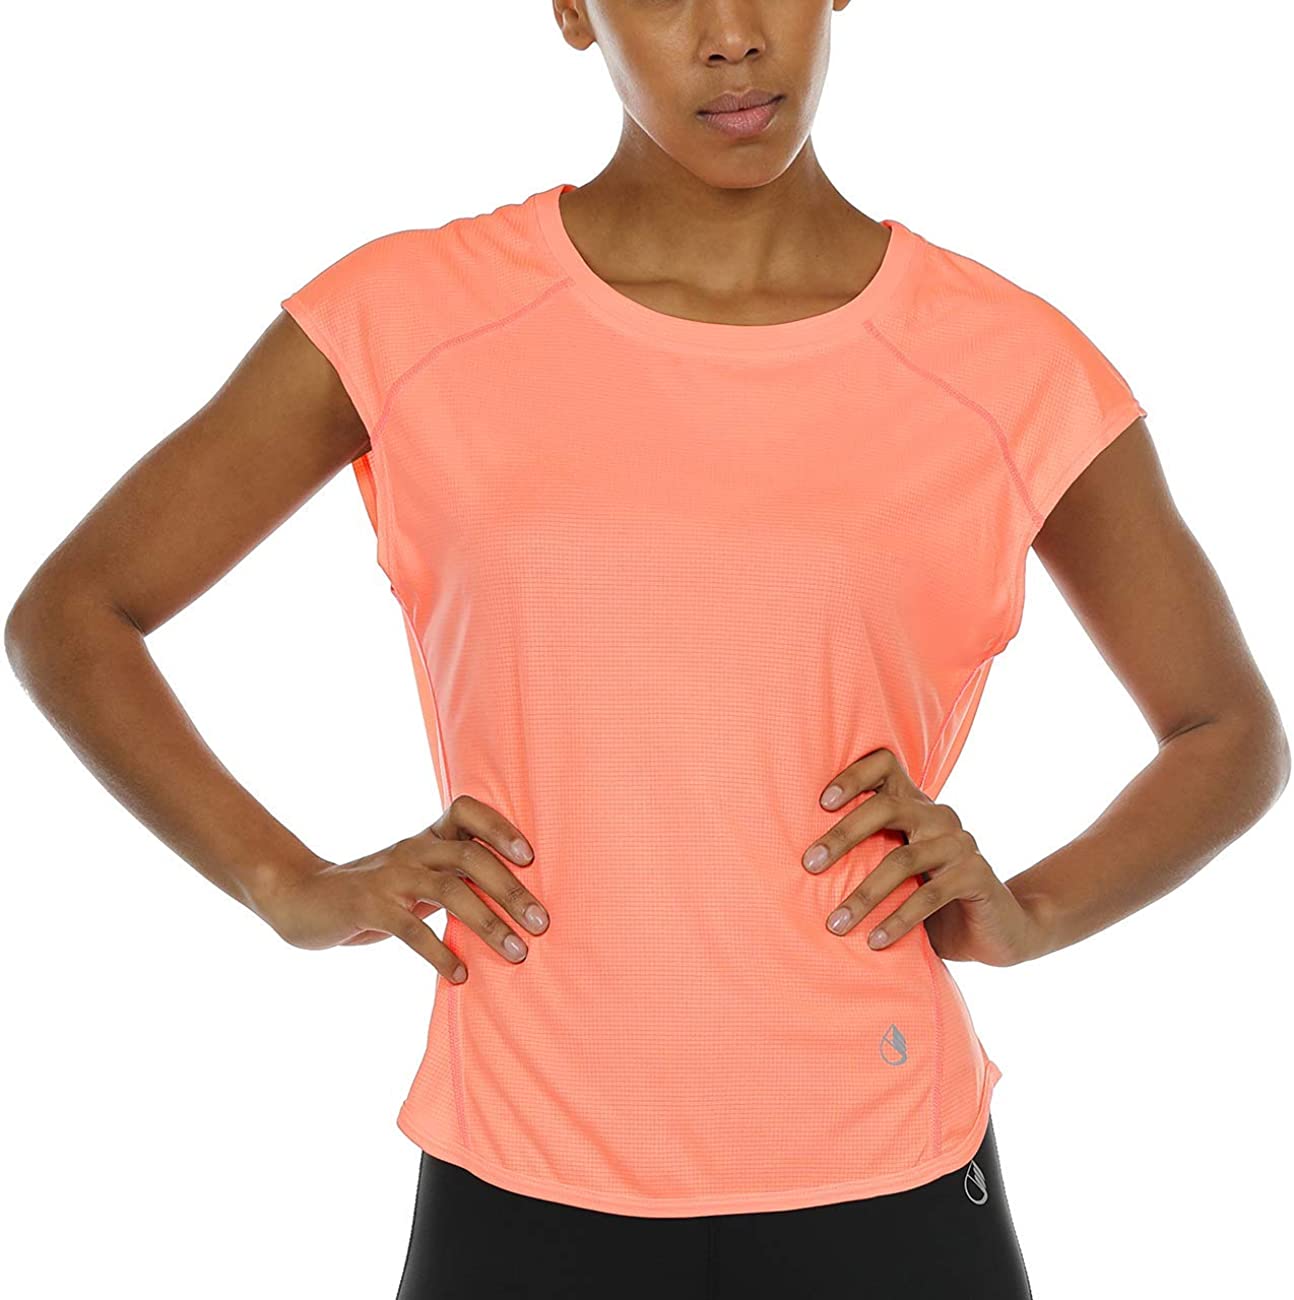 icyzone Yoga Tops Activewear Raglan Workout Tank Tops Fitness Sleeveless Shirts for Women 